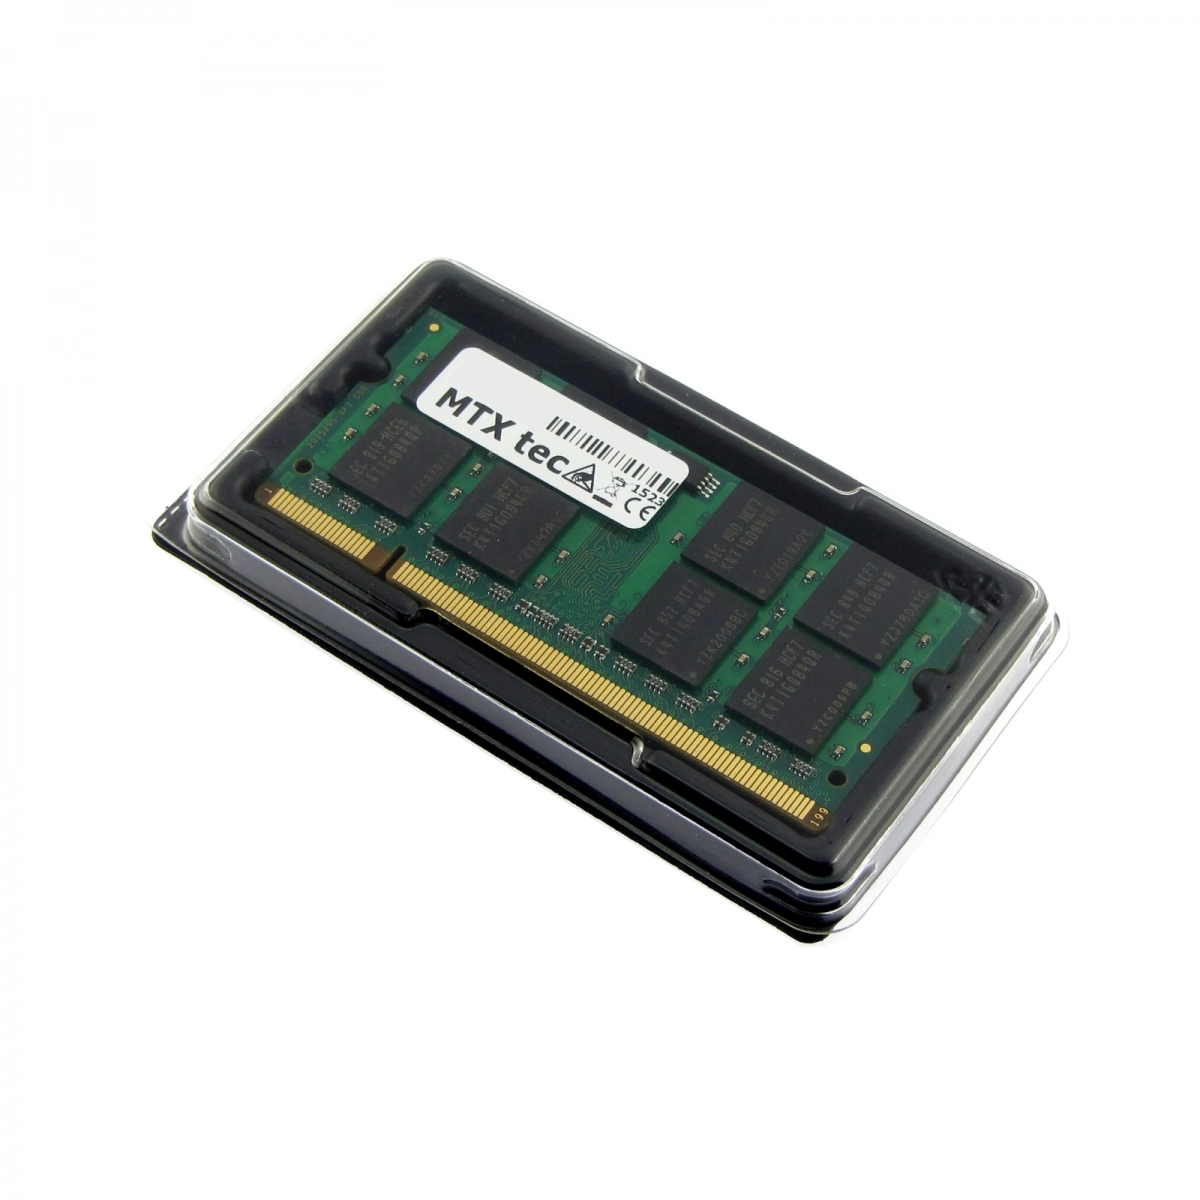 MTXtec Arbeitsspeicher 1 GB RAM für LENOVO ThinkPad T61 (6464)